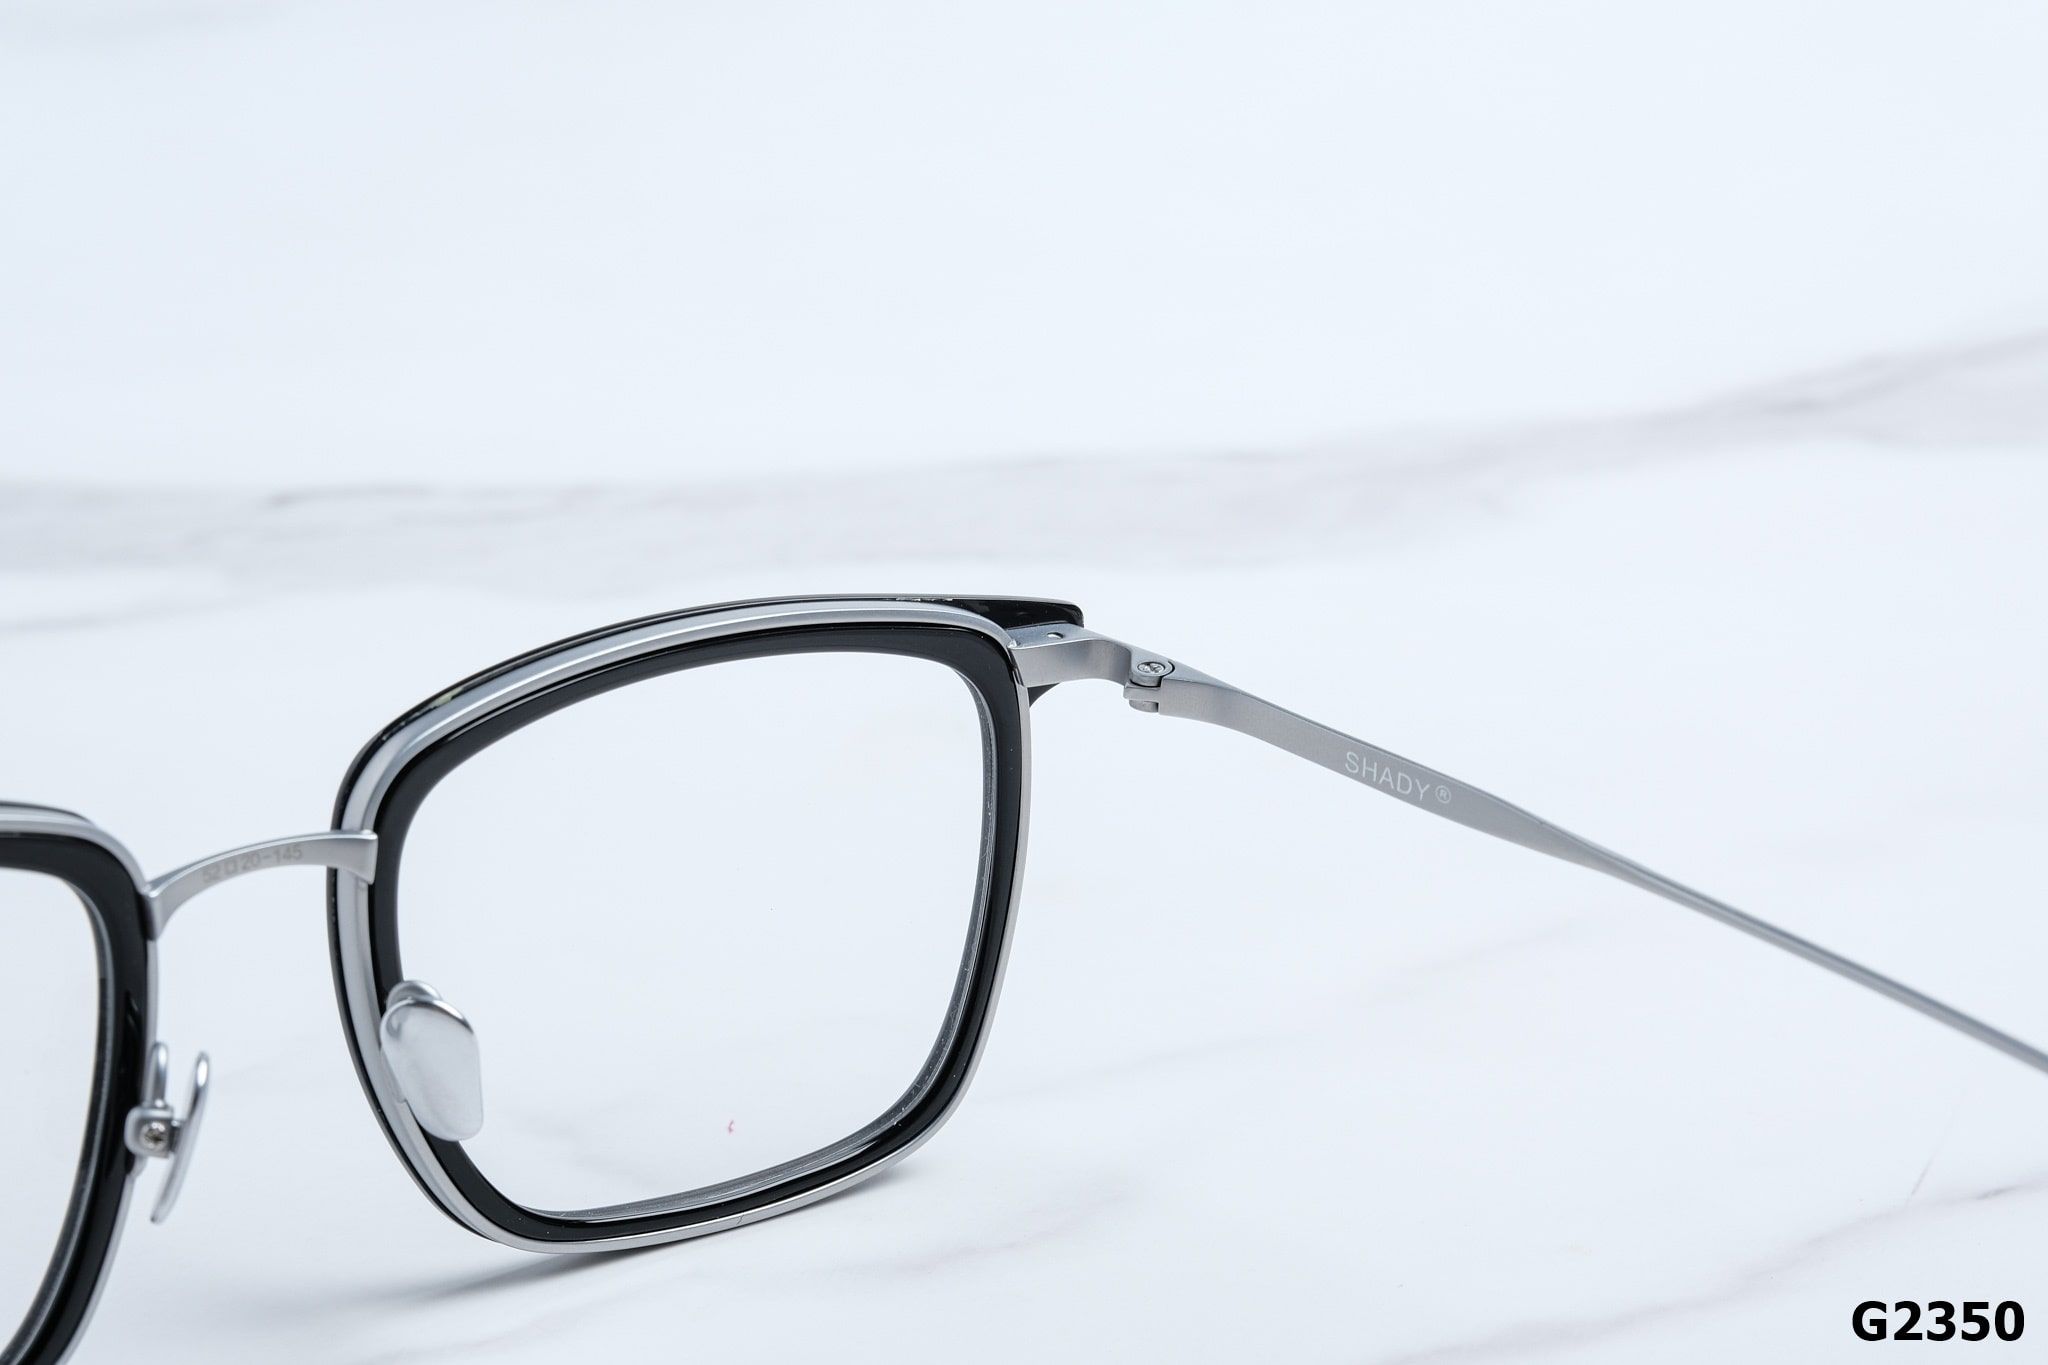  SHADY Eyewear - Glasses - G2350 